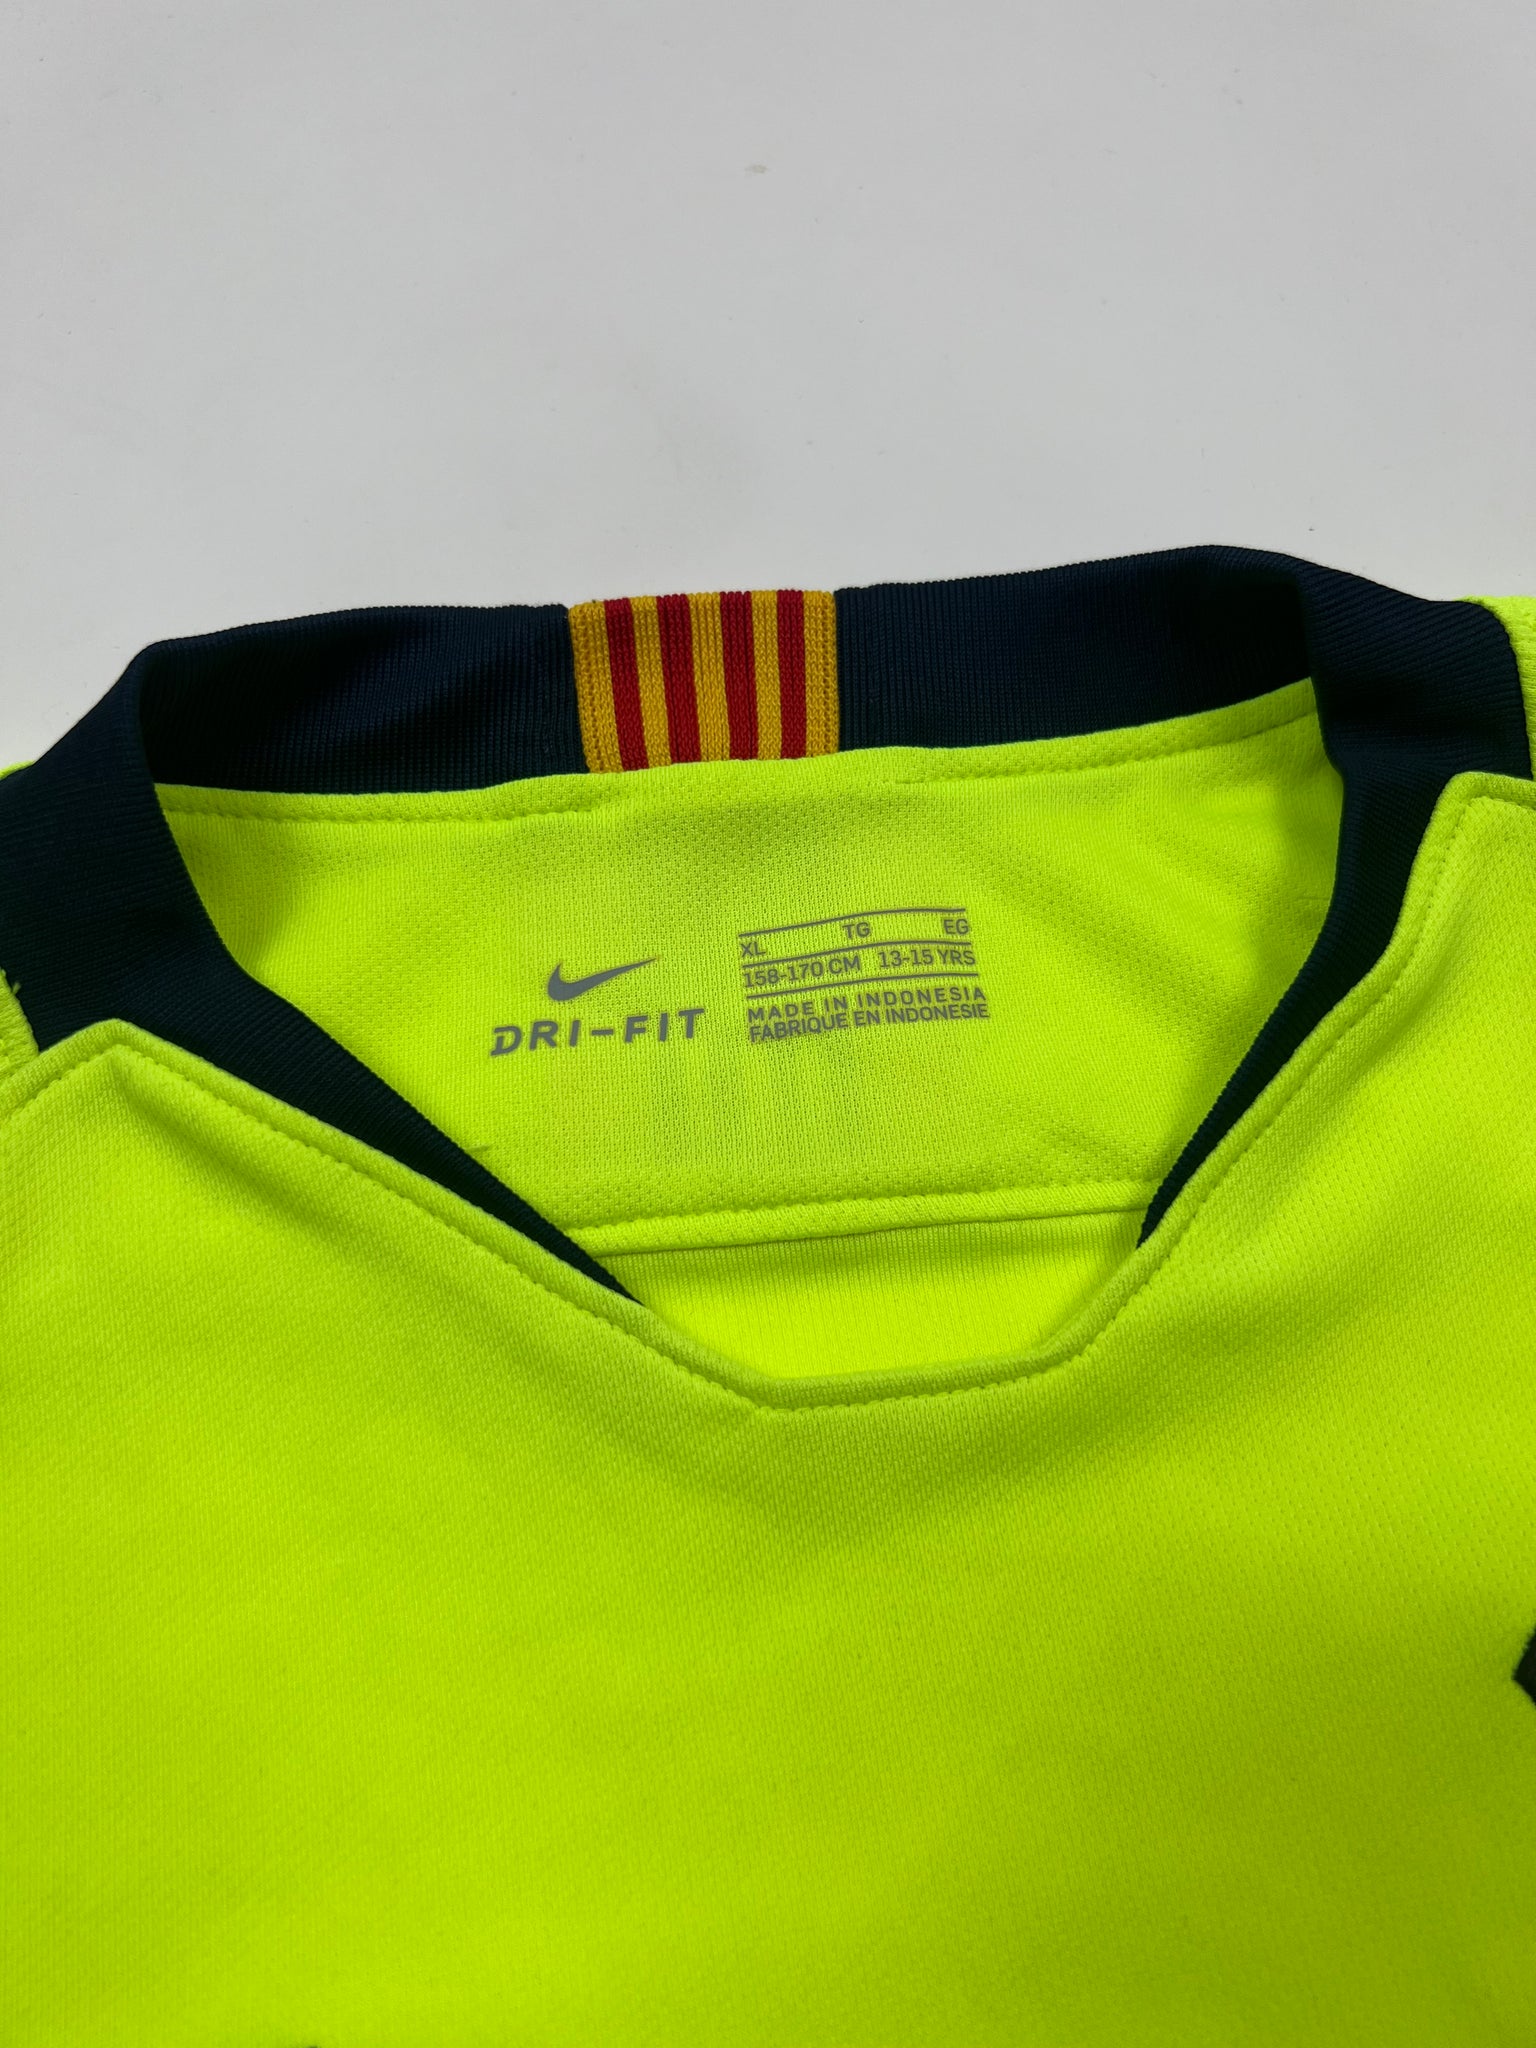 Nike FC Barcelona Jersey (XS)